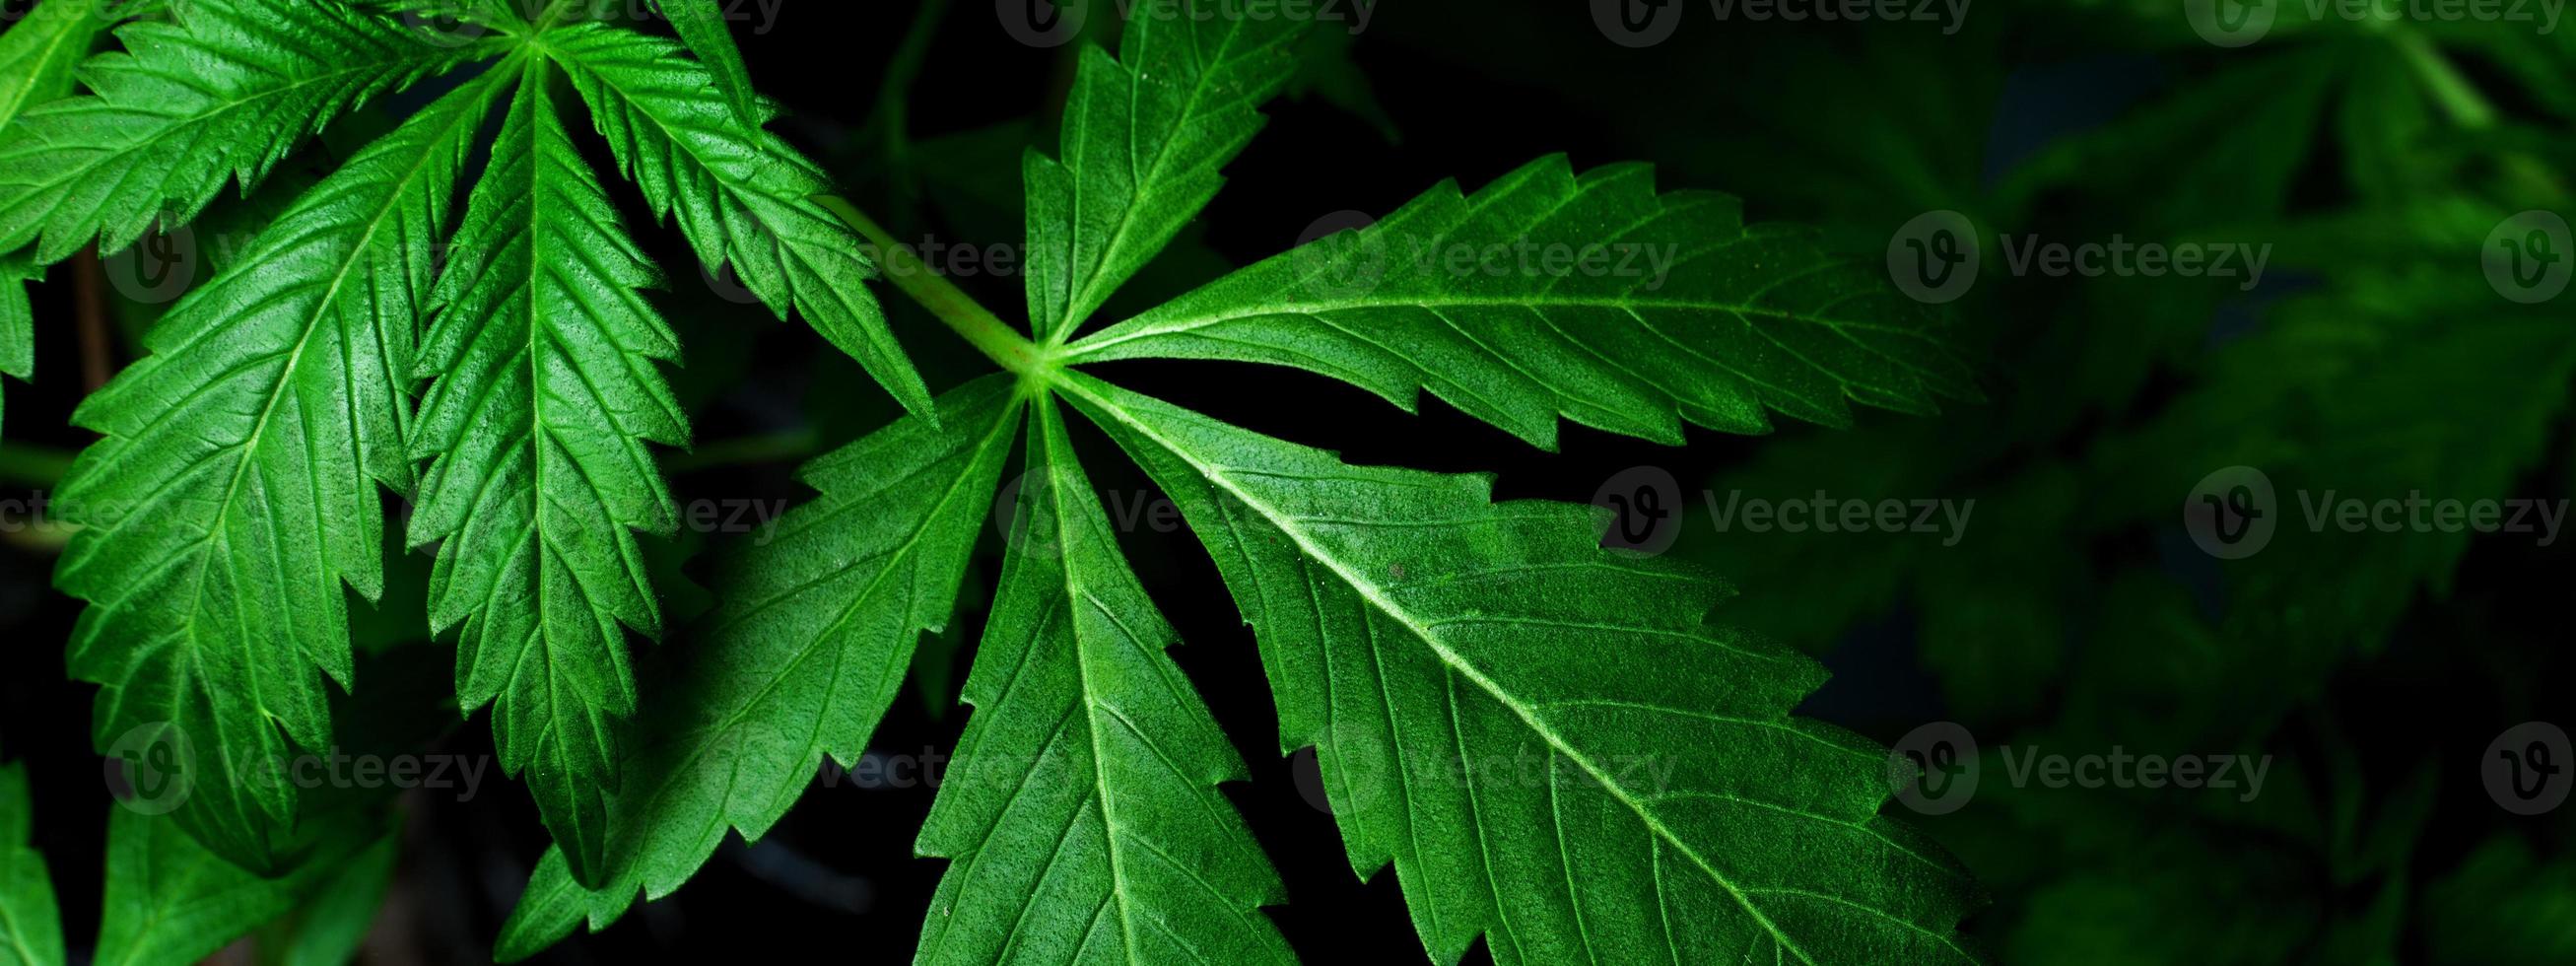 groene marihuanabladeren, medicinale cannabisplant op donkere achtergrond. foto